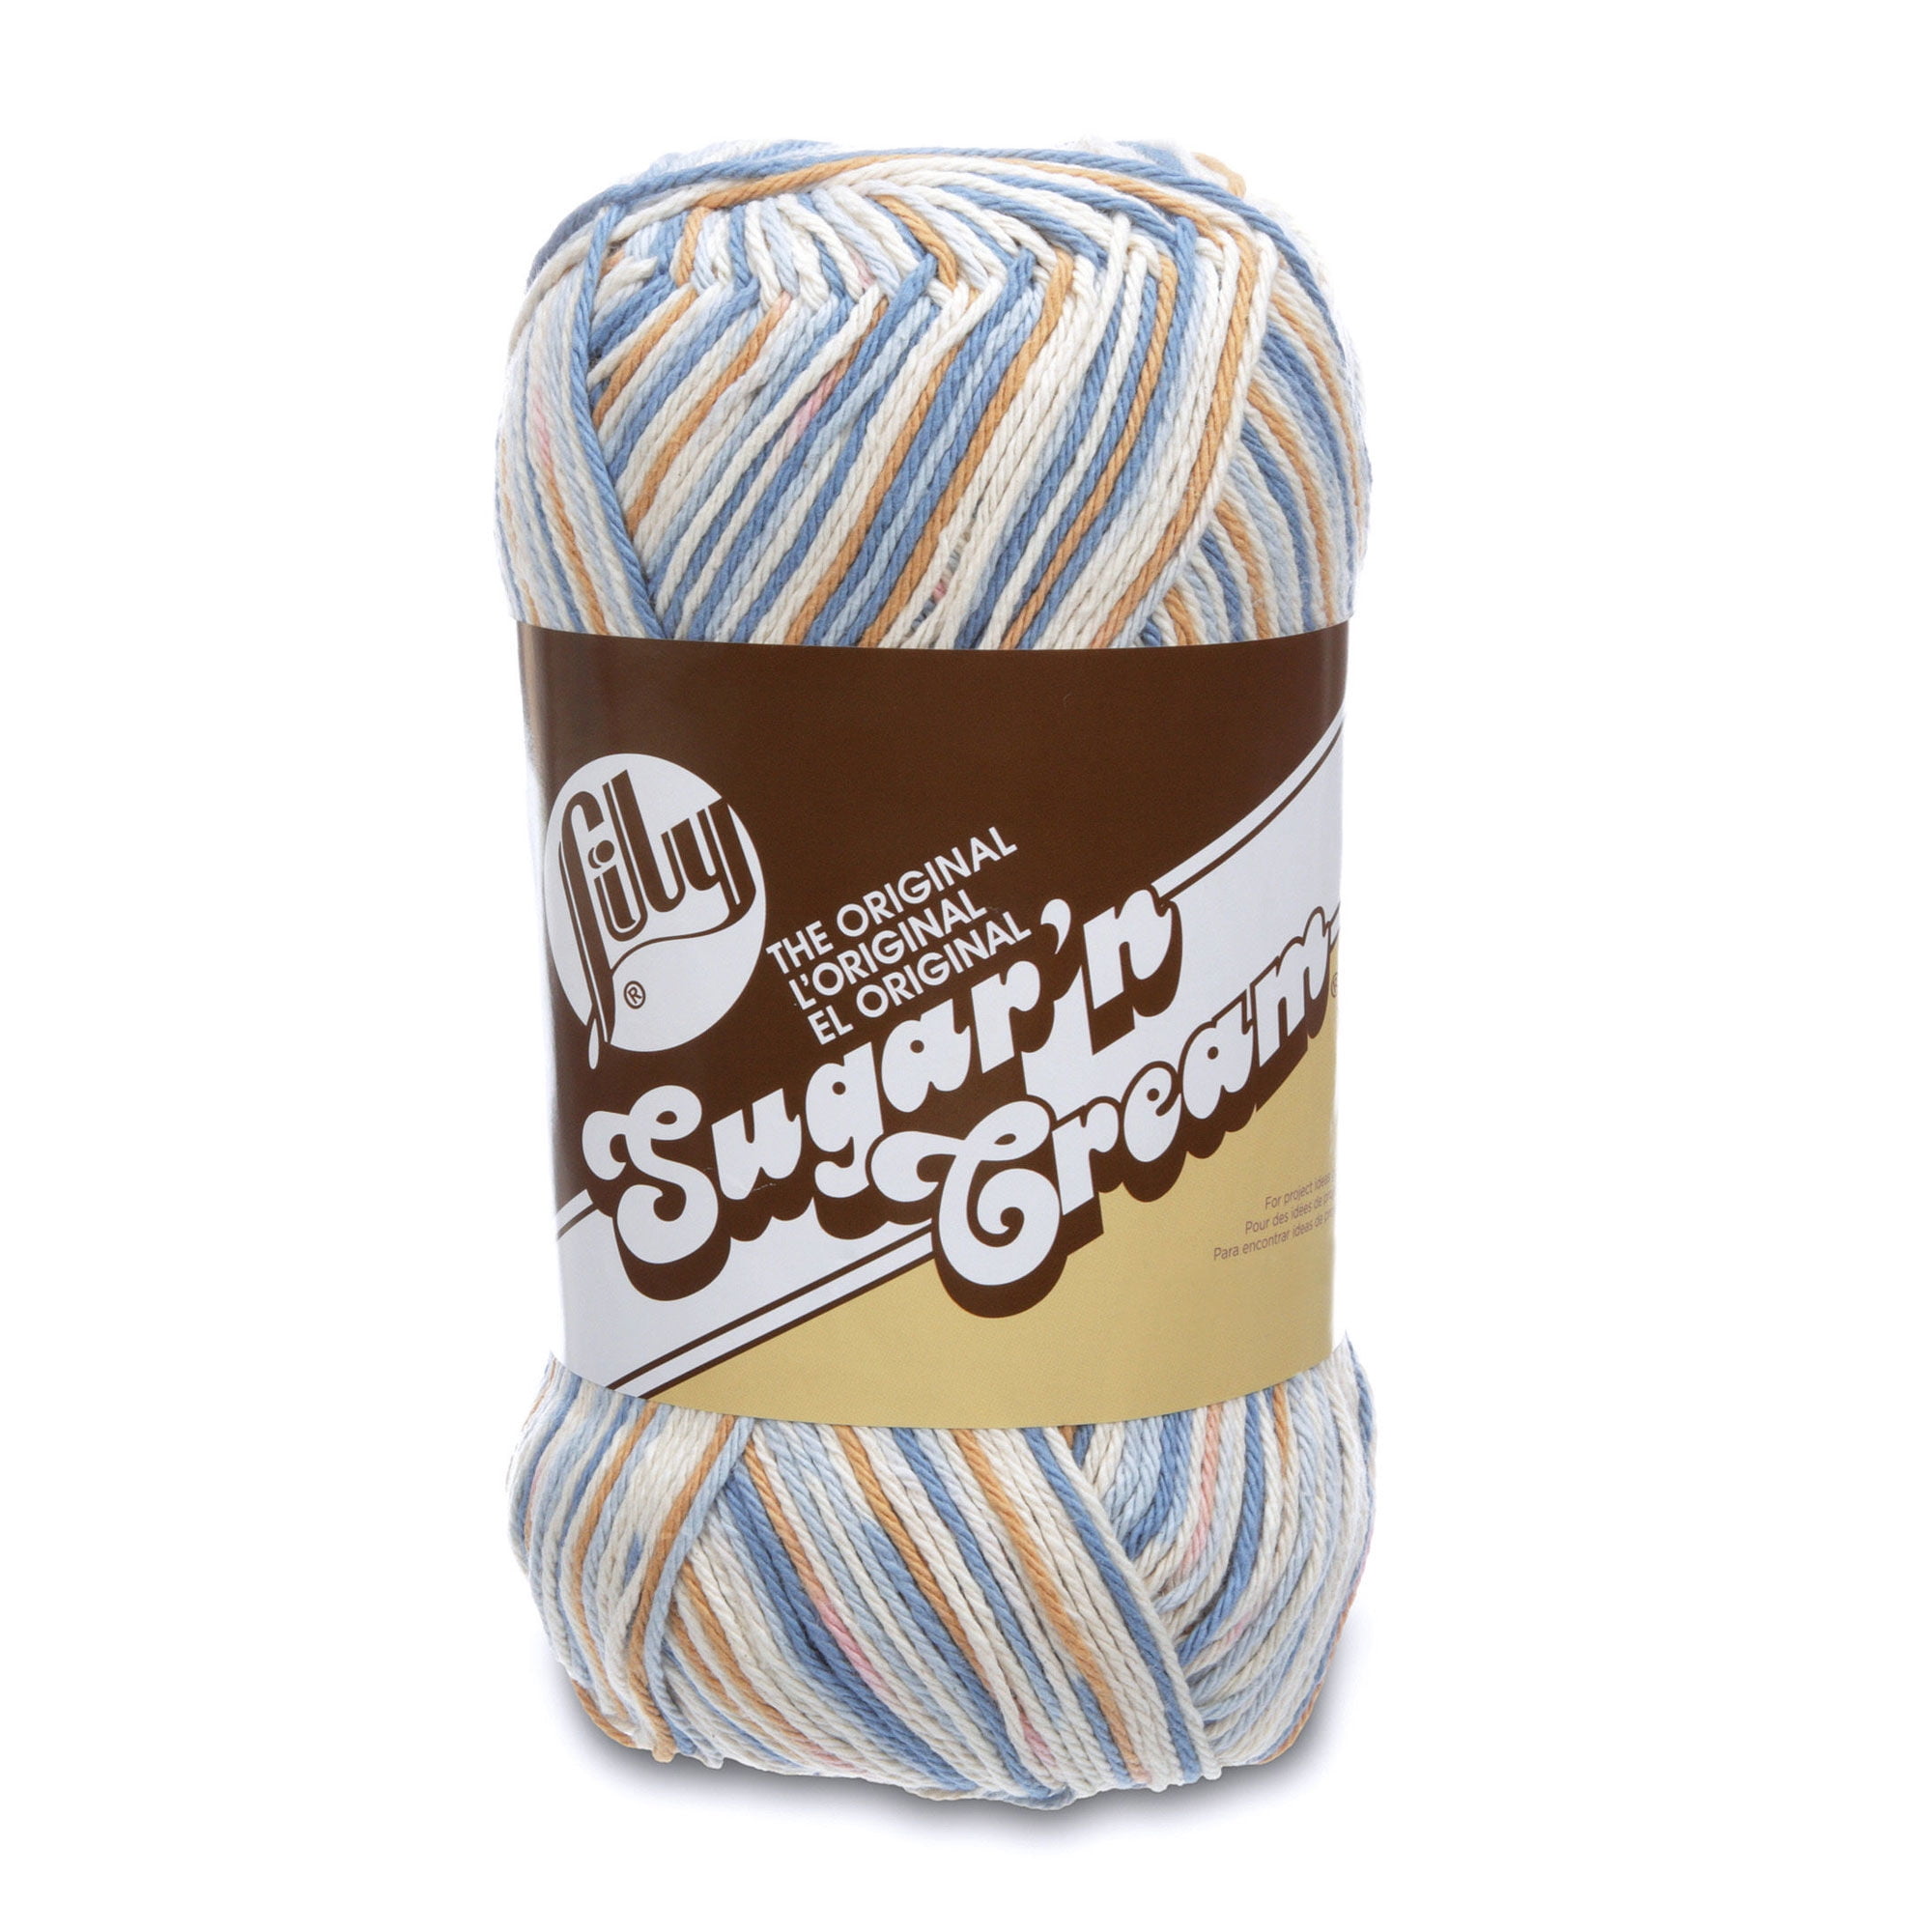 NOTN-SNL-61534 Lily Sugar 'N Cream The Original Ombre Yarn, 2oz, Gauge 4  Medium, 100% Cotton, Fruit Punch - Machine Wash & Dry